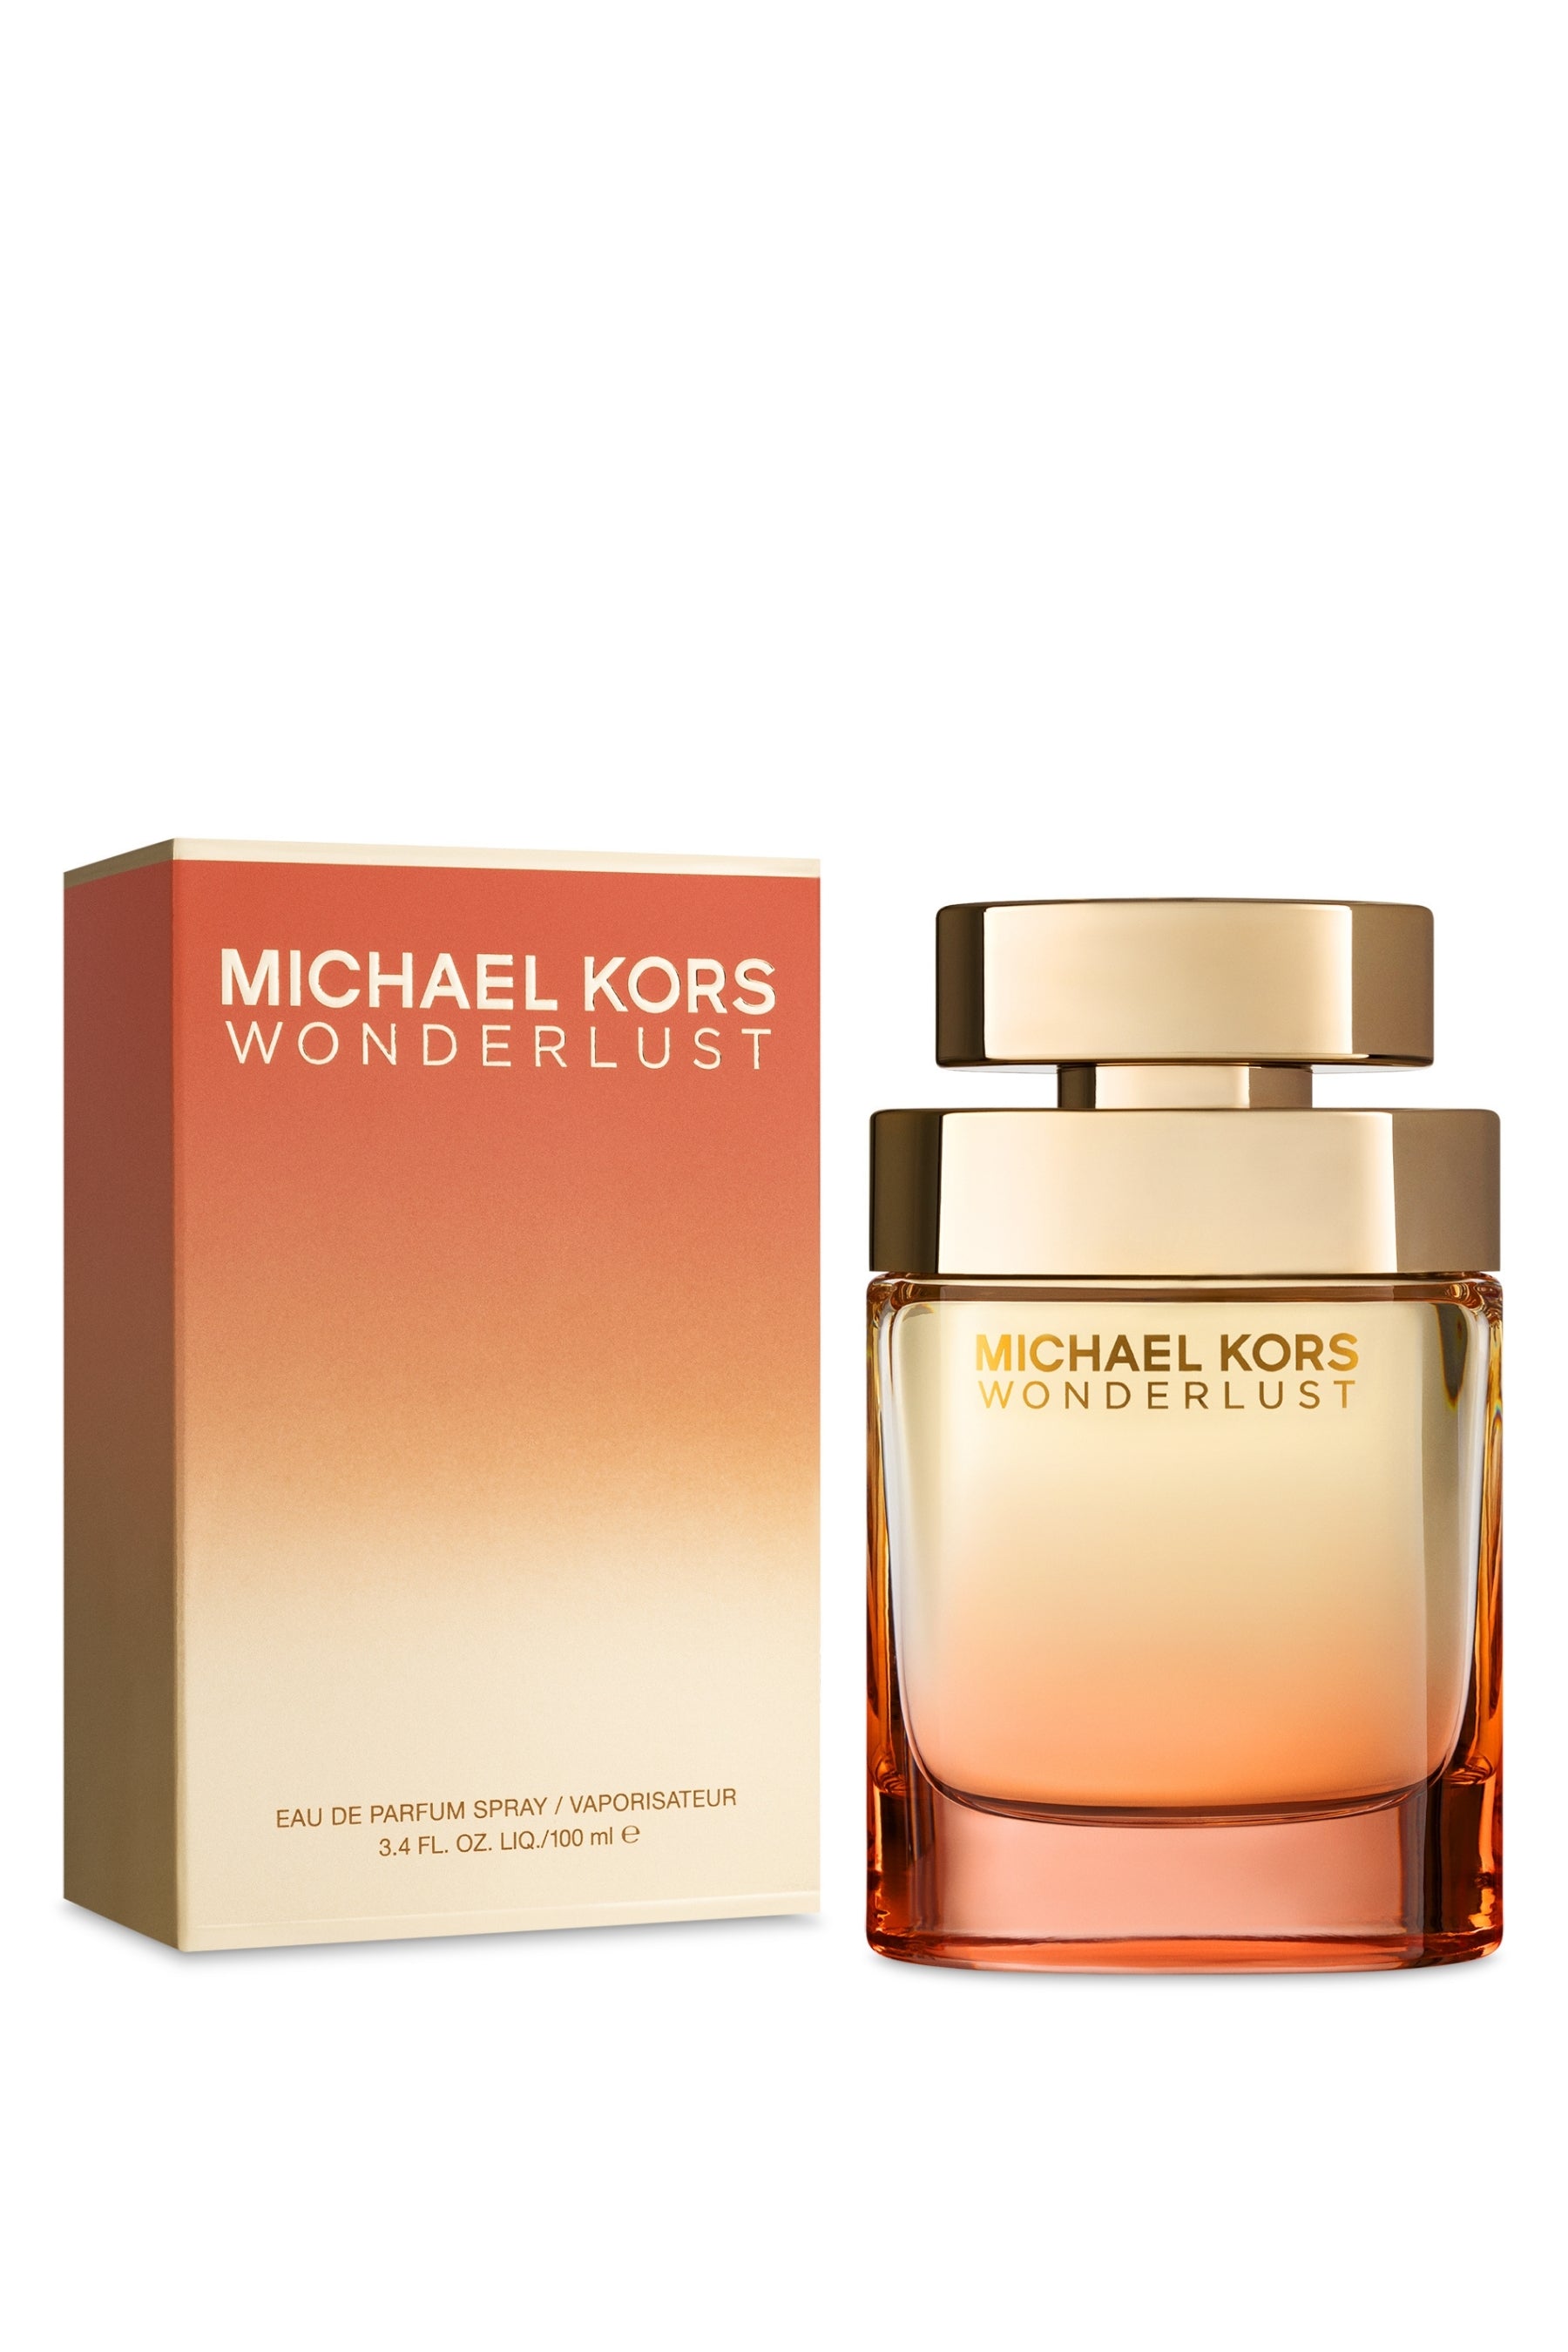 Amazoncom  Michael Kors Wonderlust Eau de Parfum Spray 34 Fl Oz  Package May Vary  Beauty  Personal Care